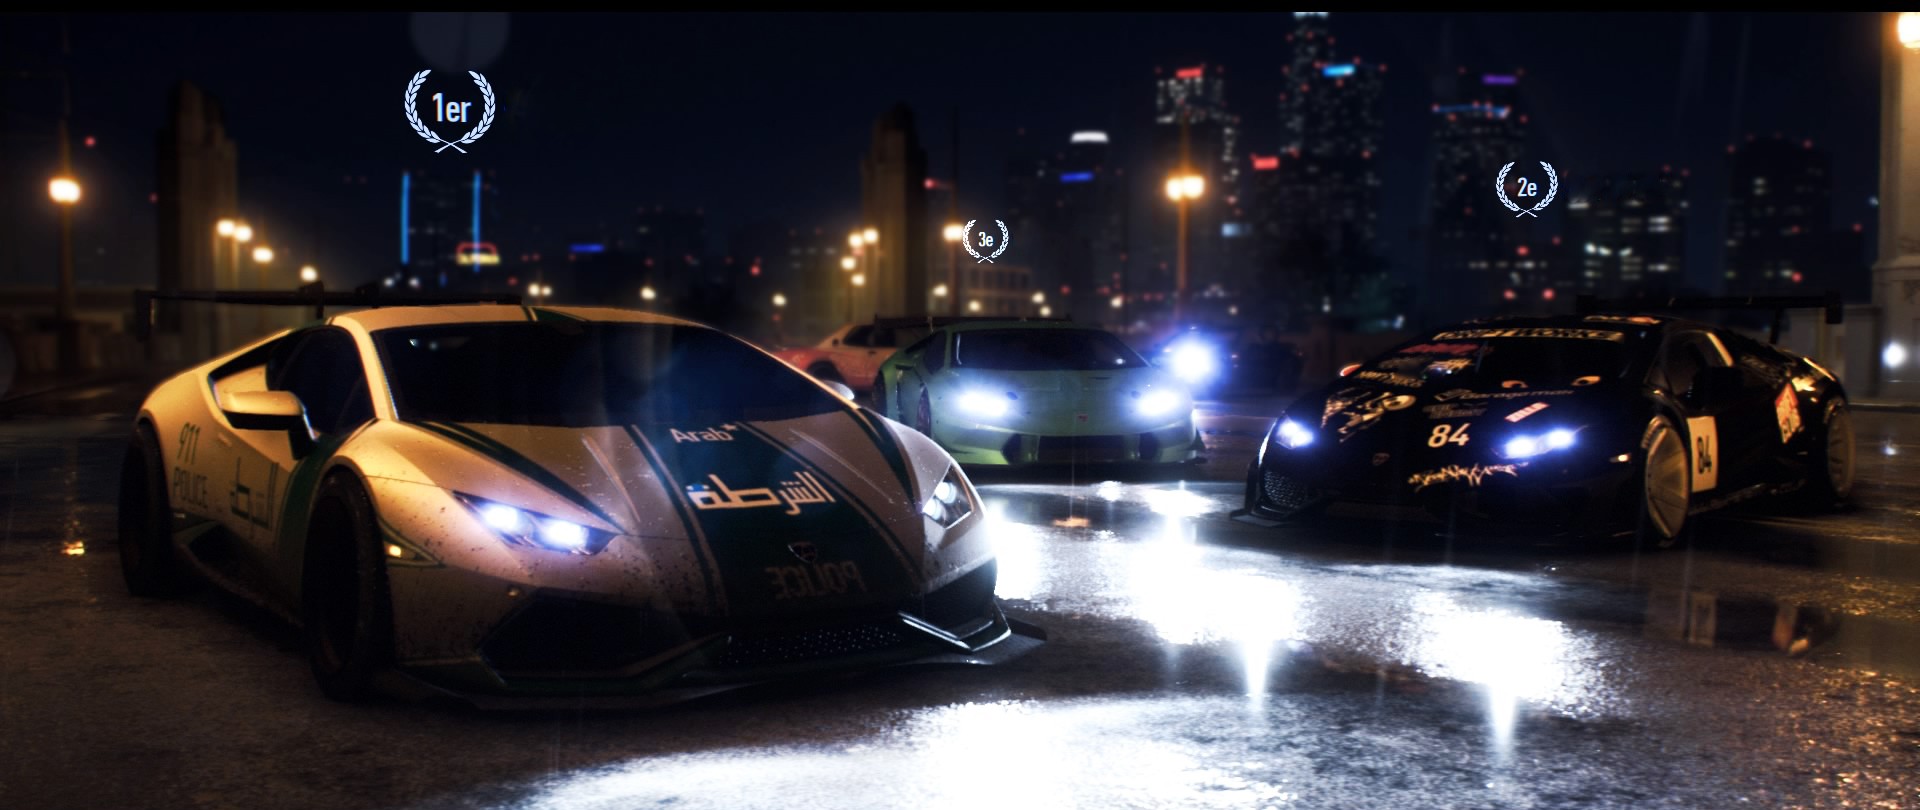 Wallpaper, Need for Speed, multiplayer, PlayStation Lamborghini, Dubai, police, United Arab Emirates 1920x810